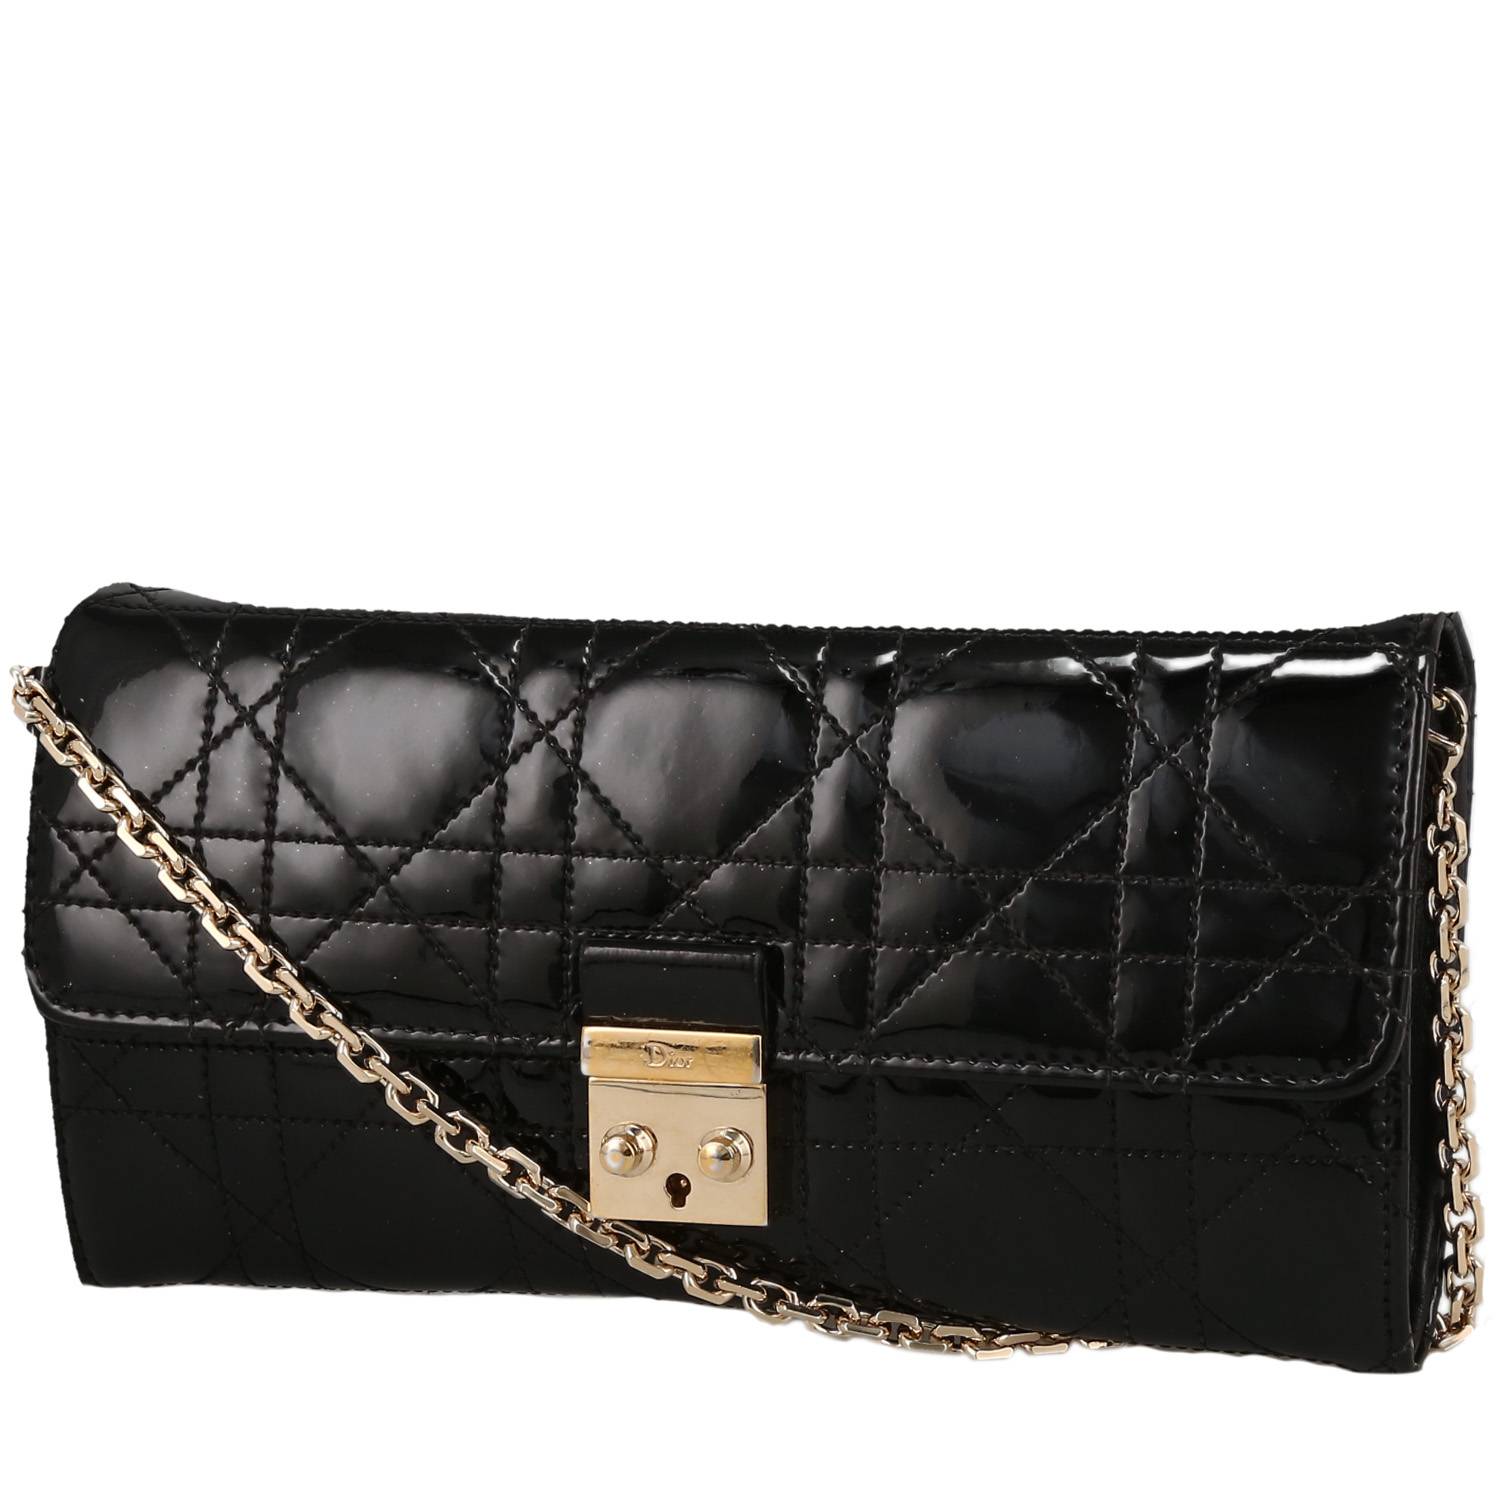 Promenade Shoulder Bag In Black Patent Leather